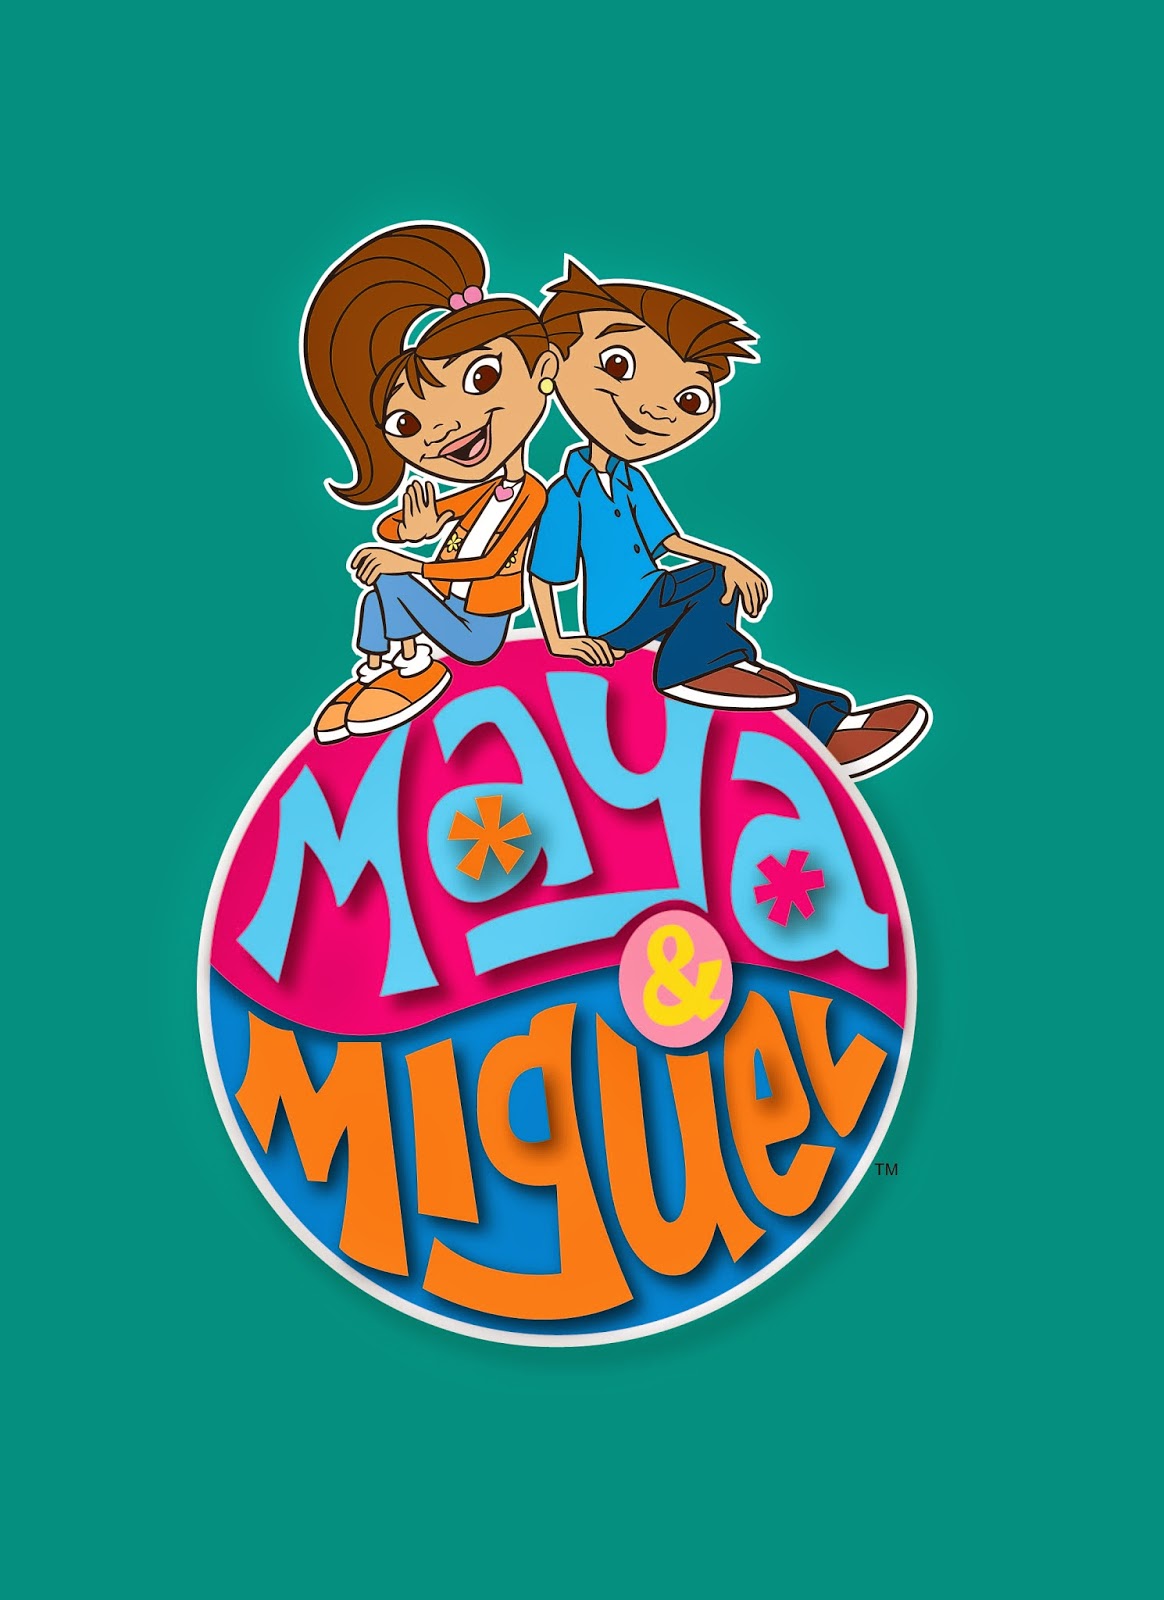 Scholastic Media’s award-winning TV series, Maya & Miguel ™, is celebra...